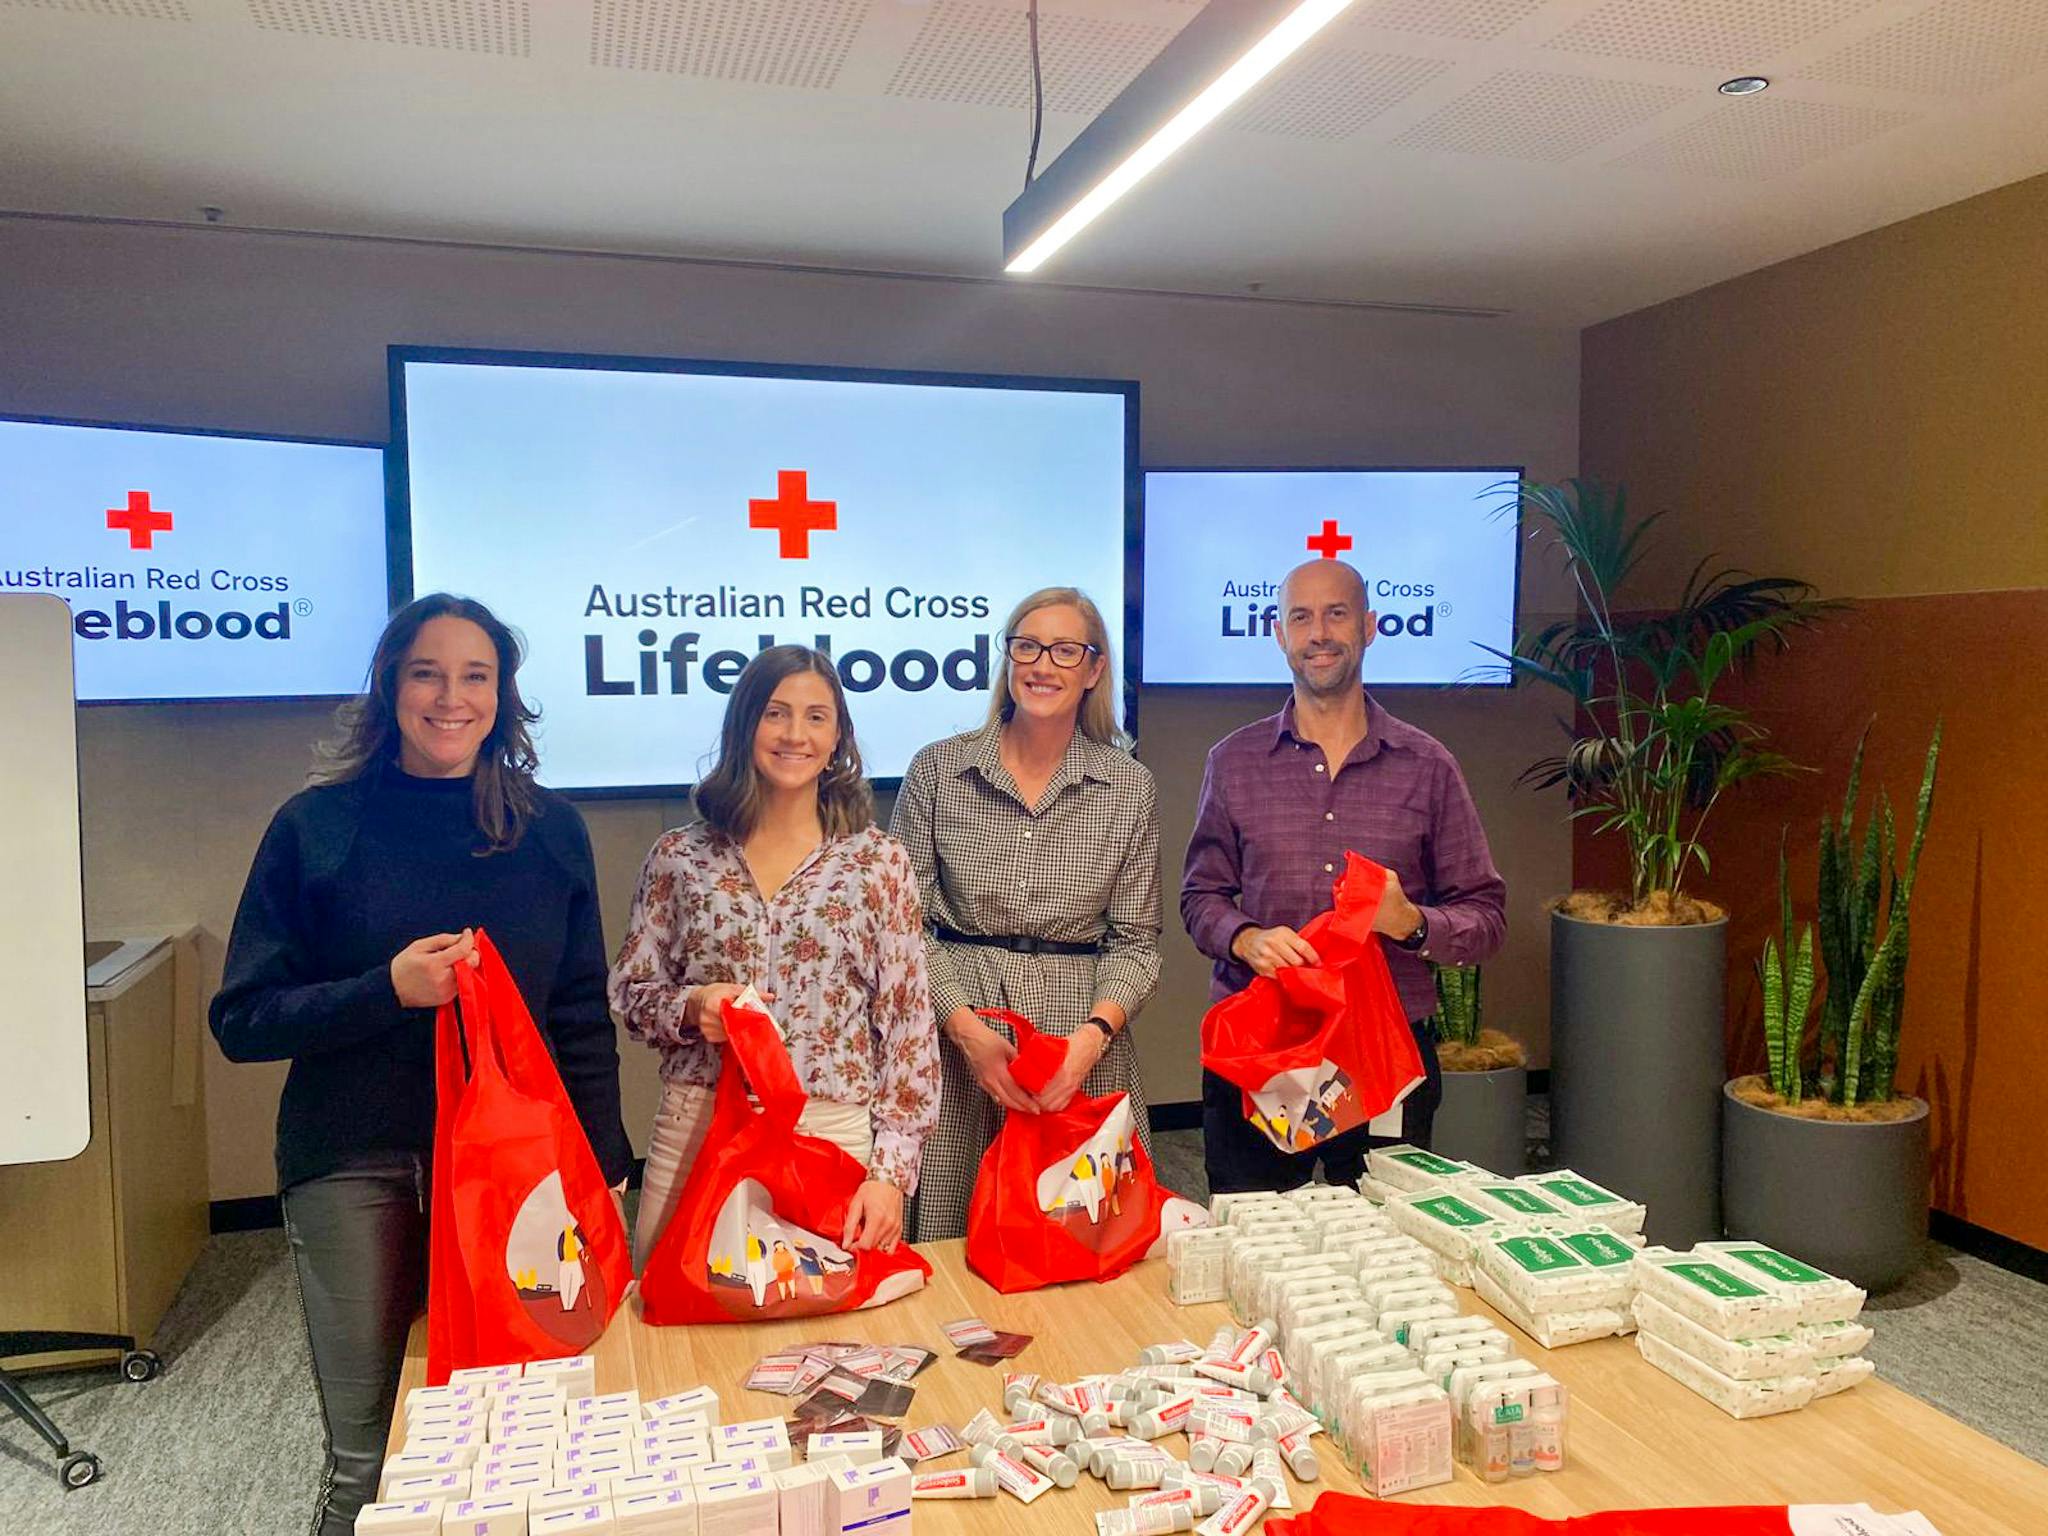 Sudocrem donates $100,000 to Australian Red Cross Lifeblood breast milk service